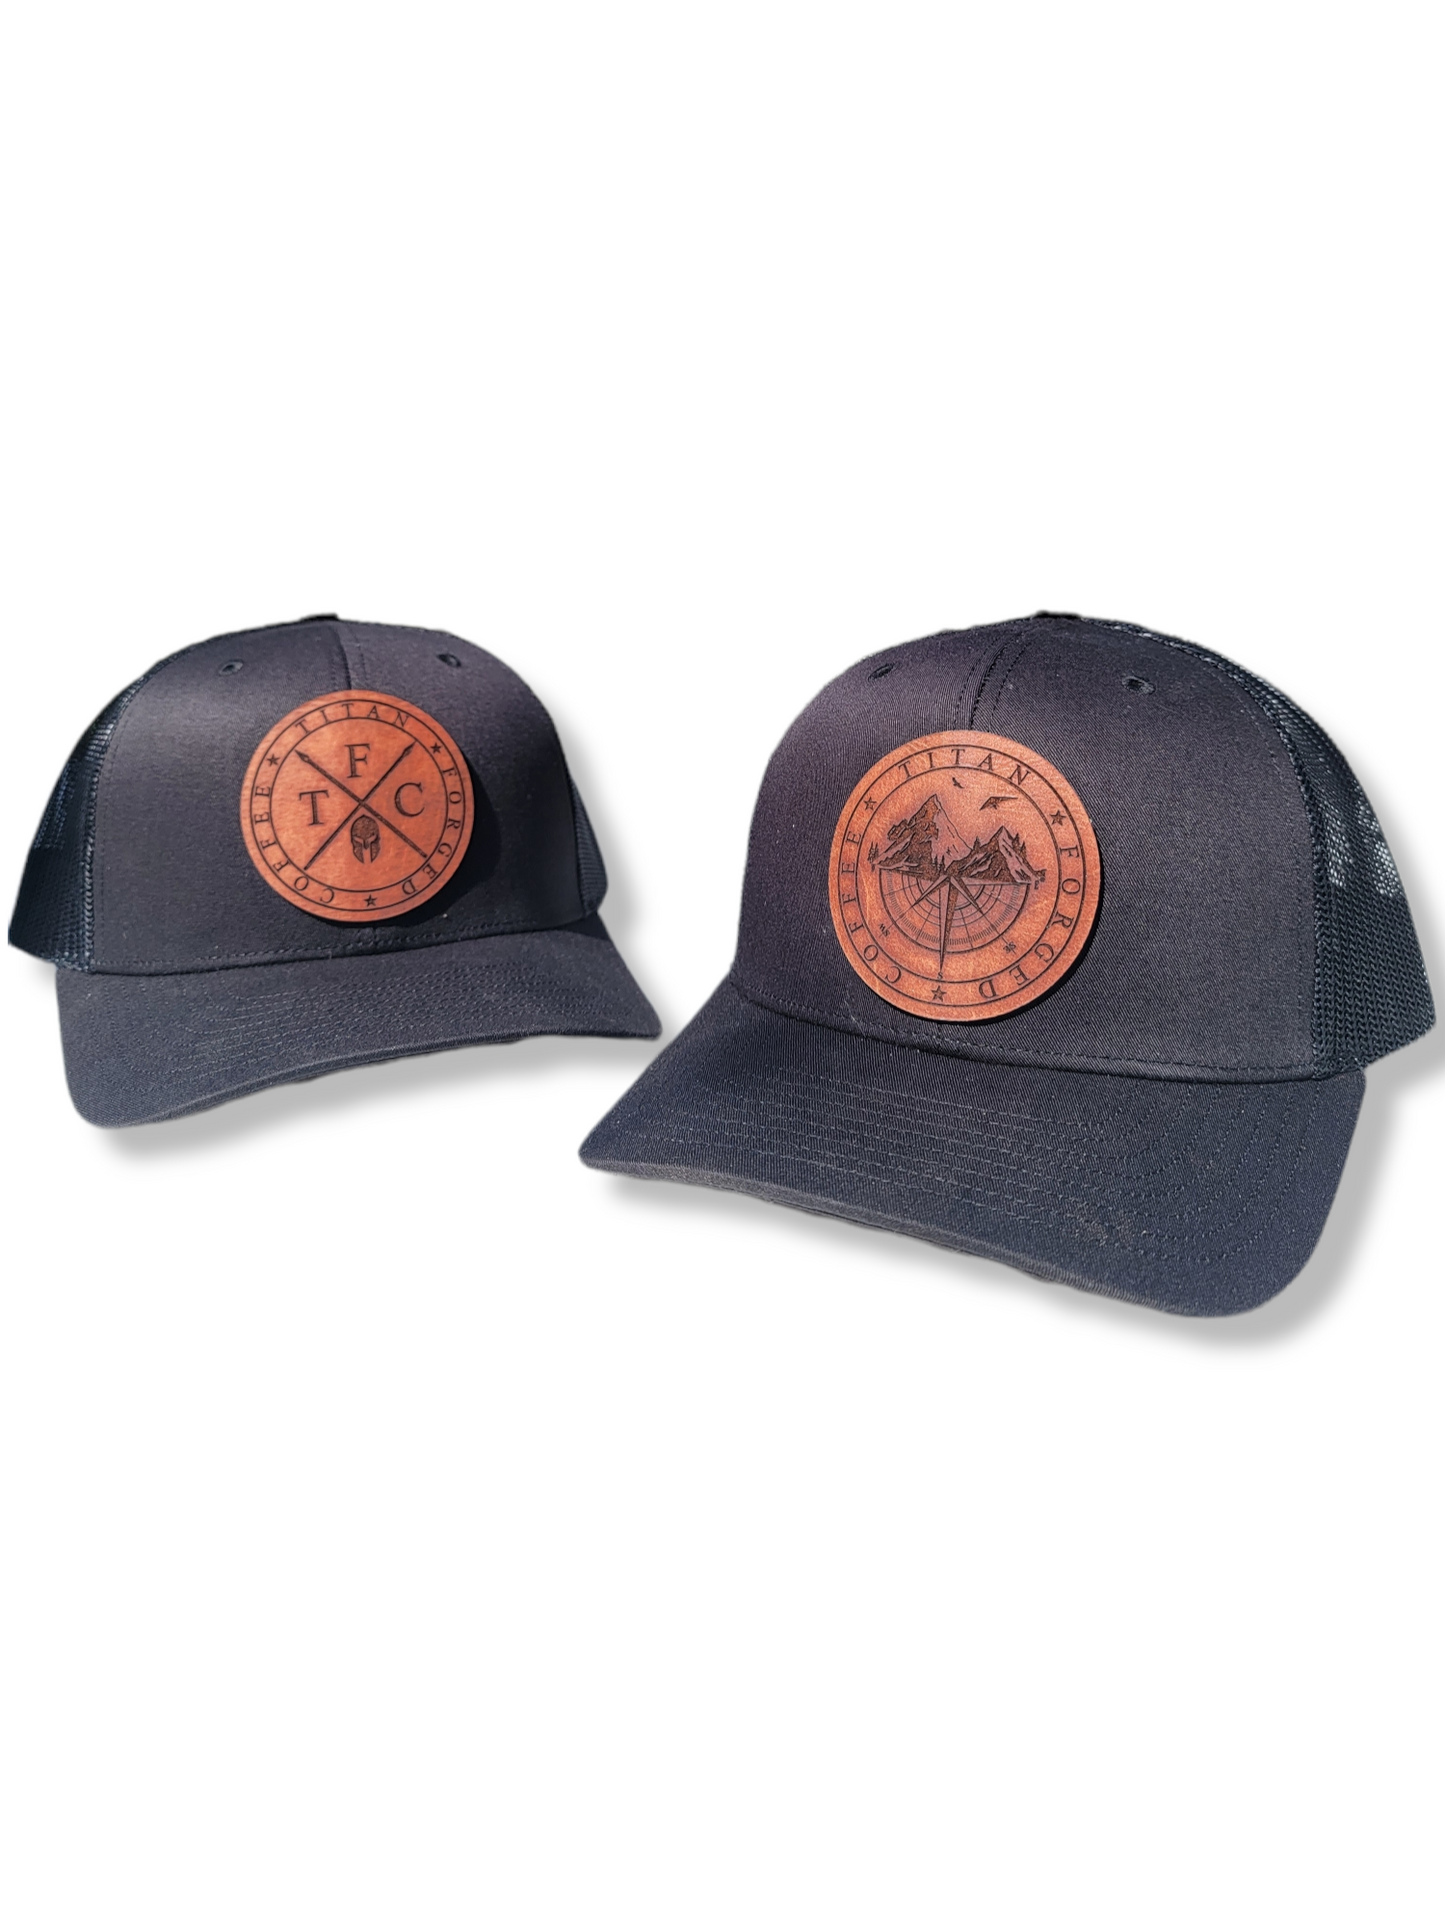 ADVENTURE- Leather Patch, Black Trucker Hat